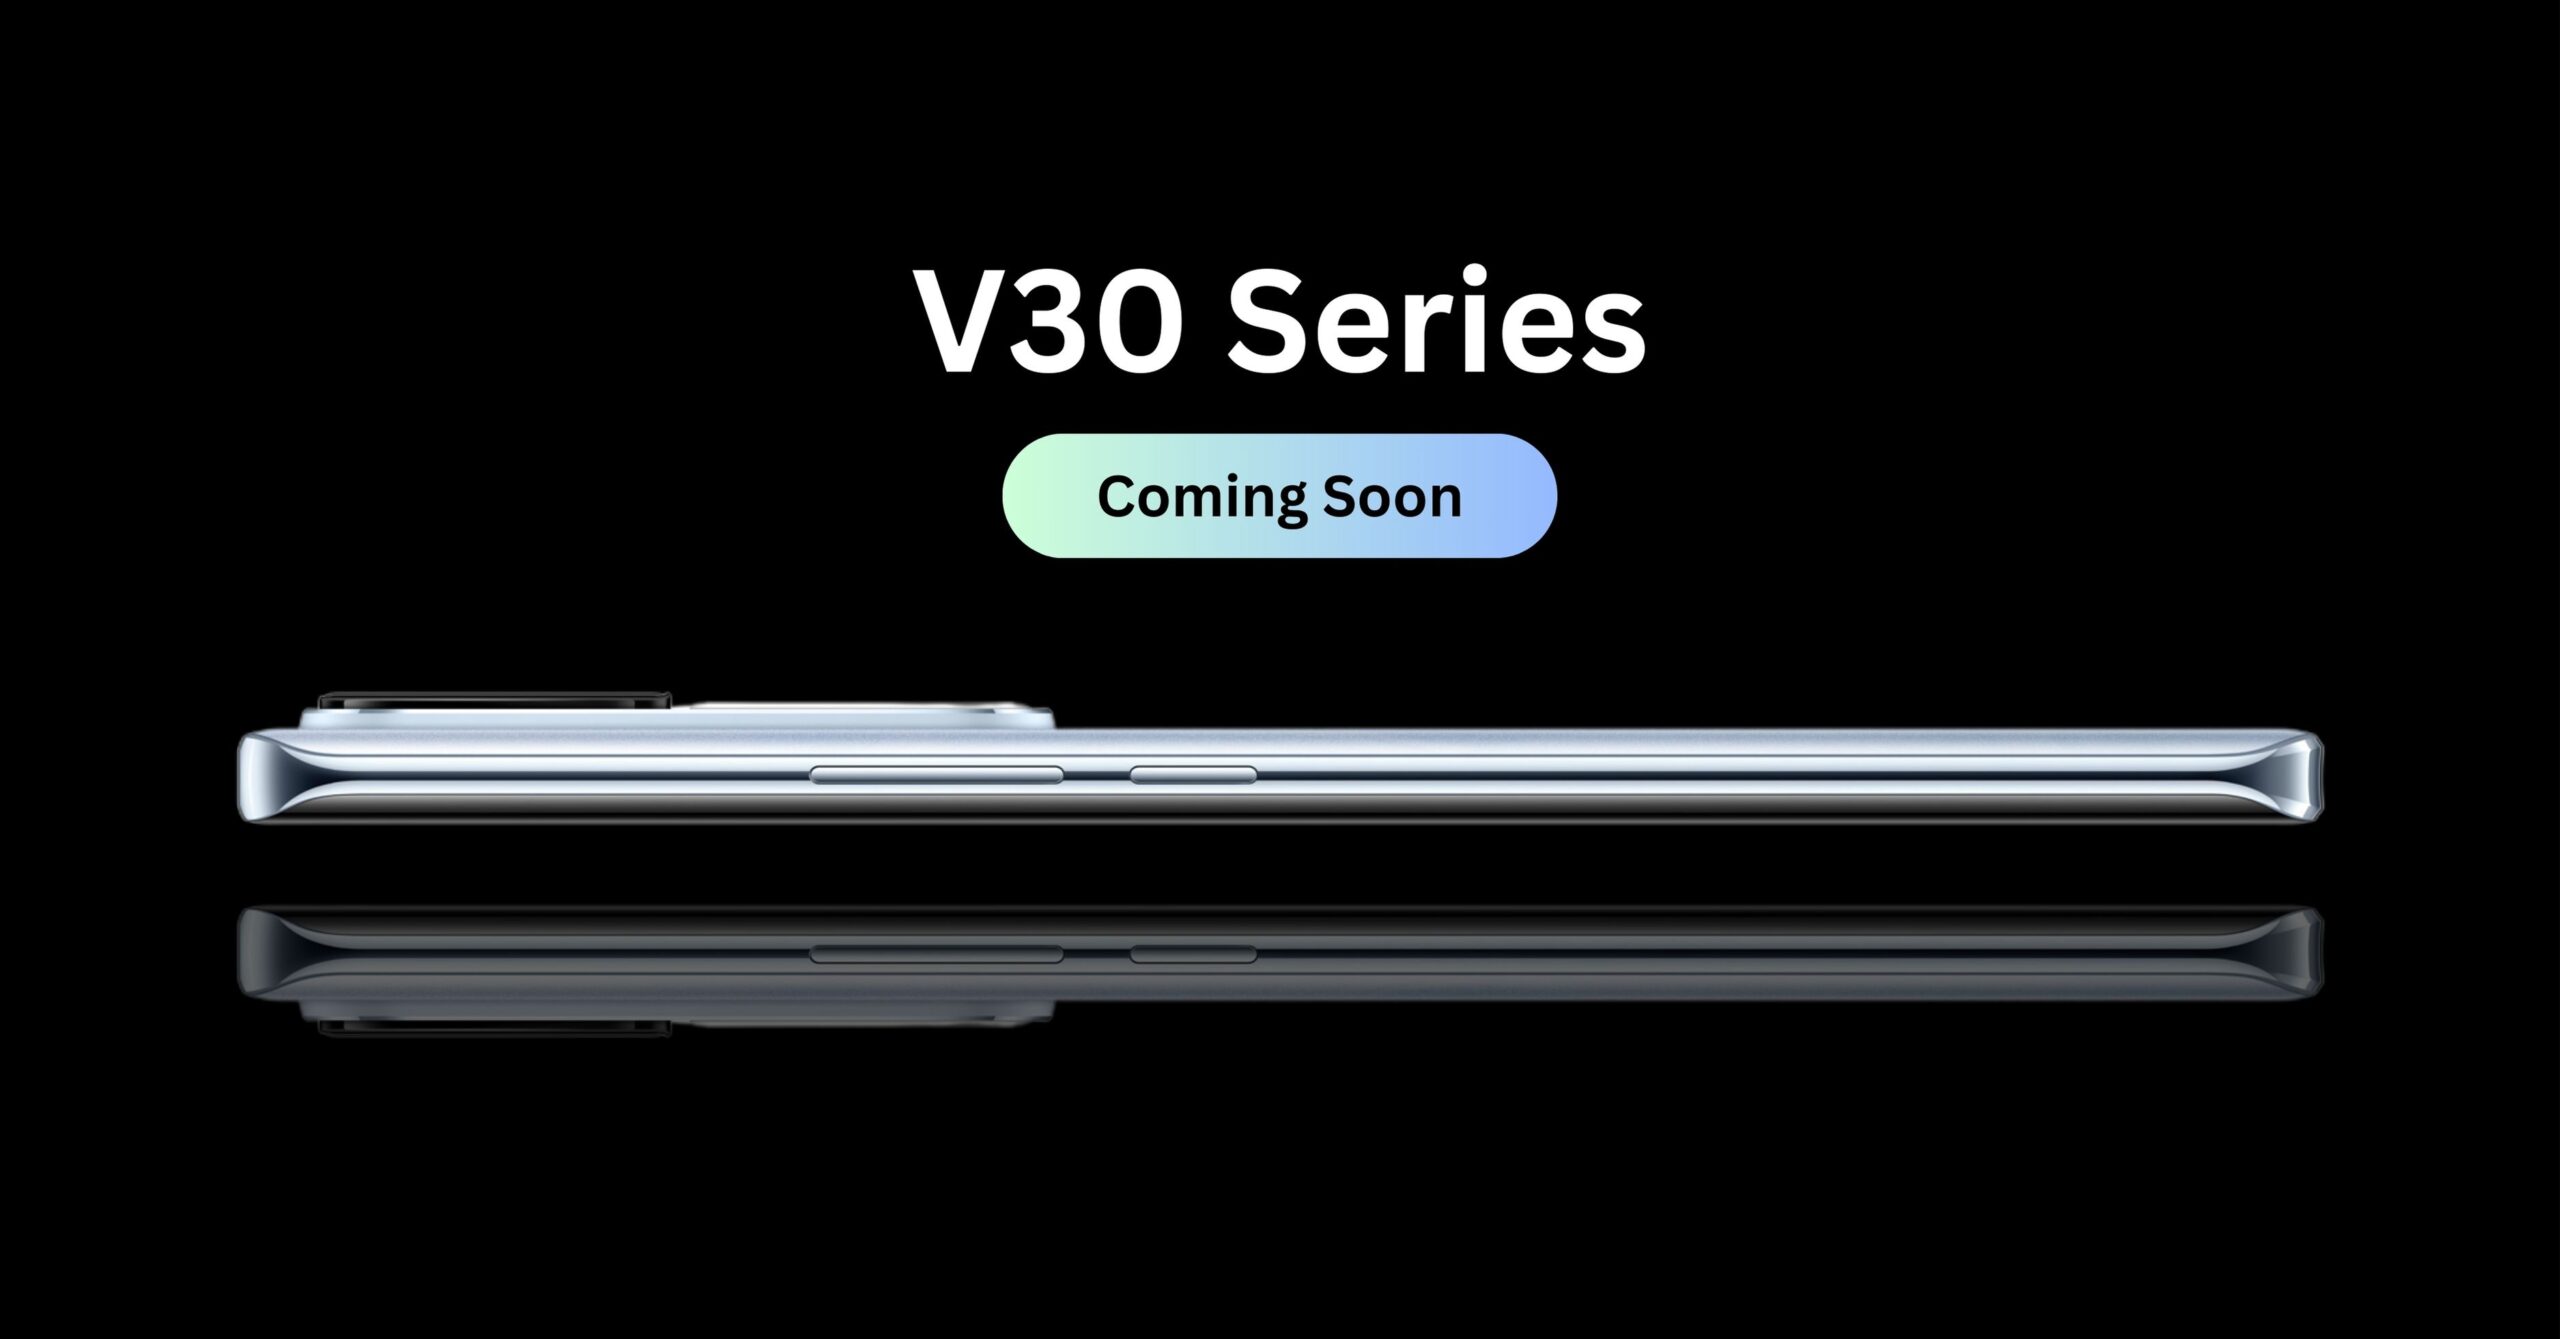 Sneak peek into the upcoming vivo V30 Series